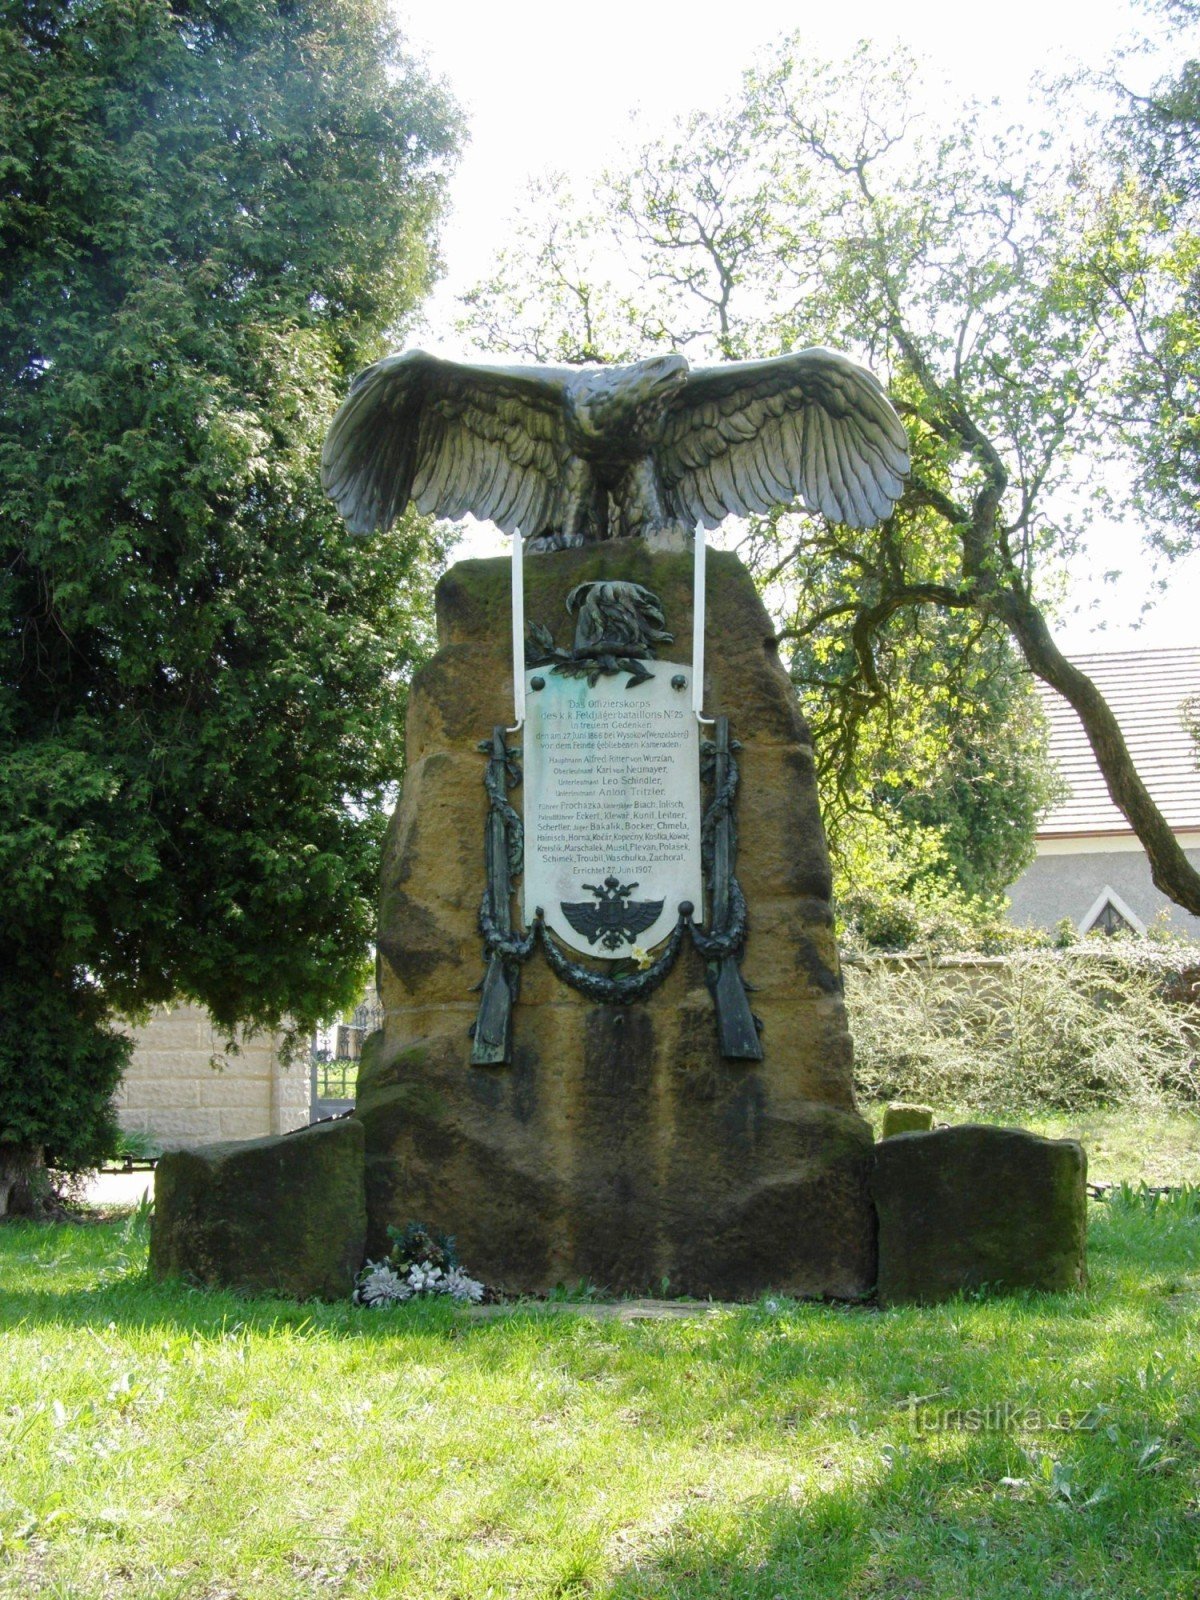 Václavice - μνημείο του Αυστριακού τάγματος κυνηγών υπαίθρου Νο. 25